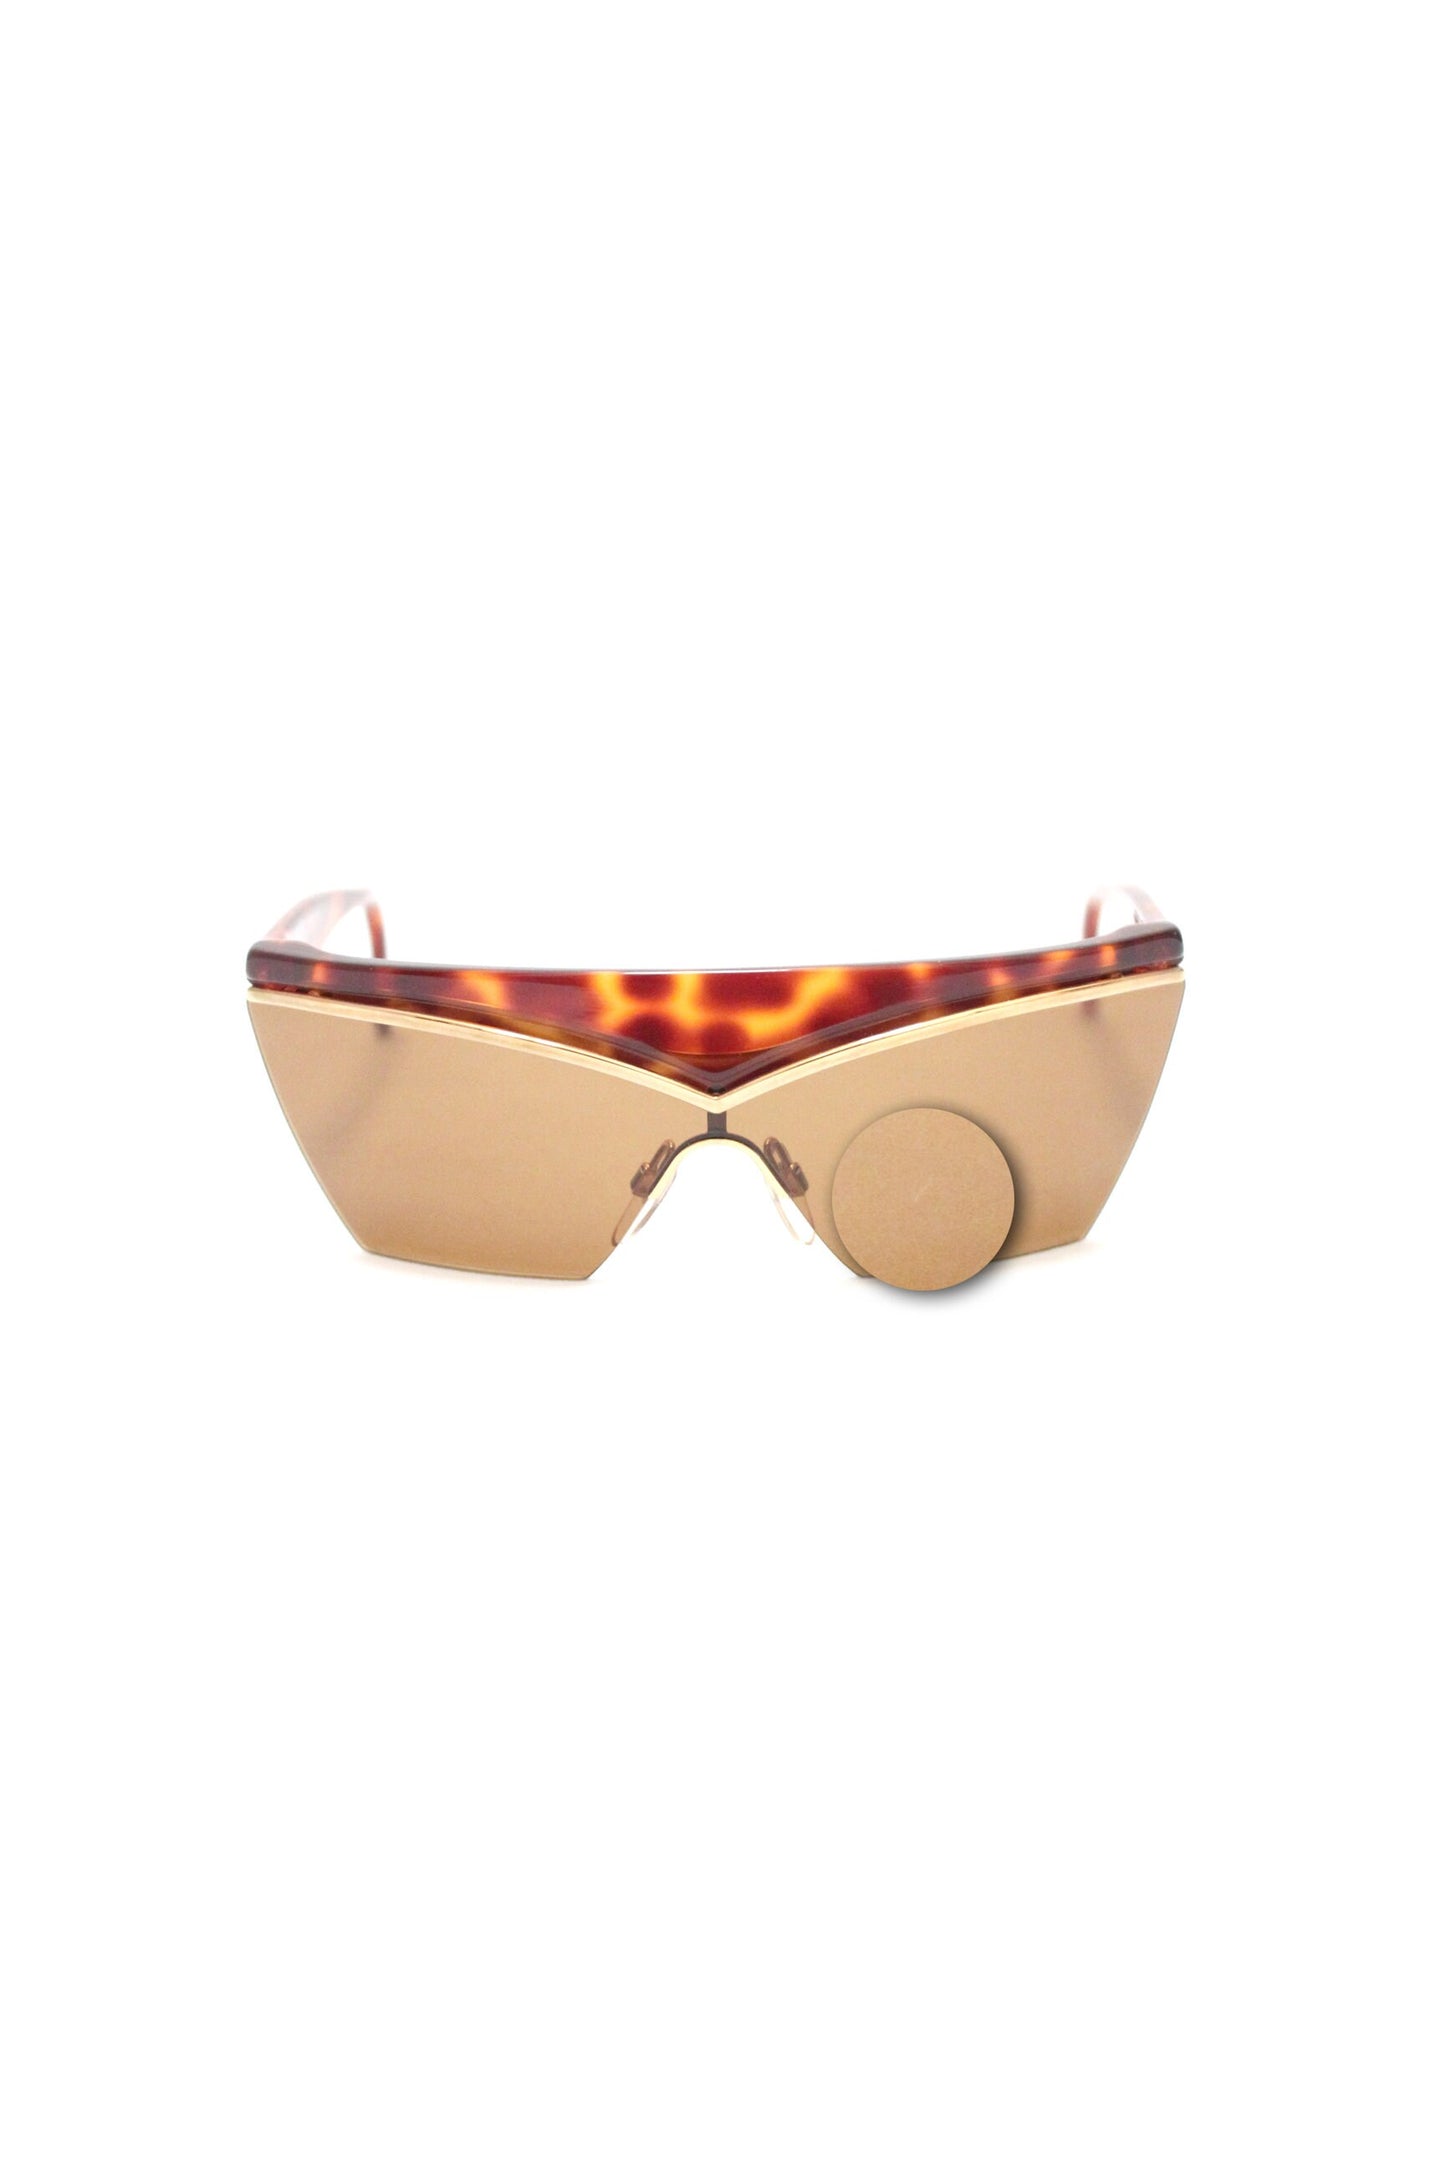 YVES SAINT LAURENT Vintage Sunglasses - New Deadstock - ysl 6506 Y507